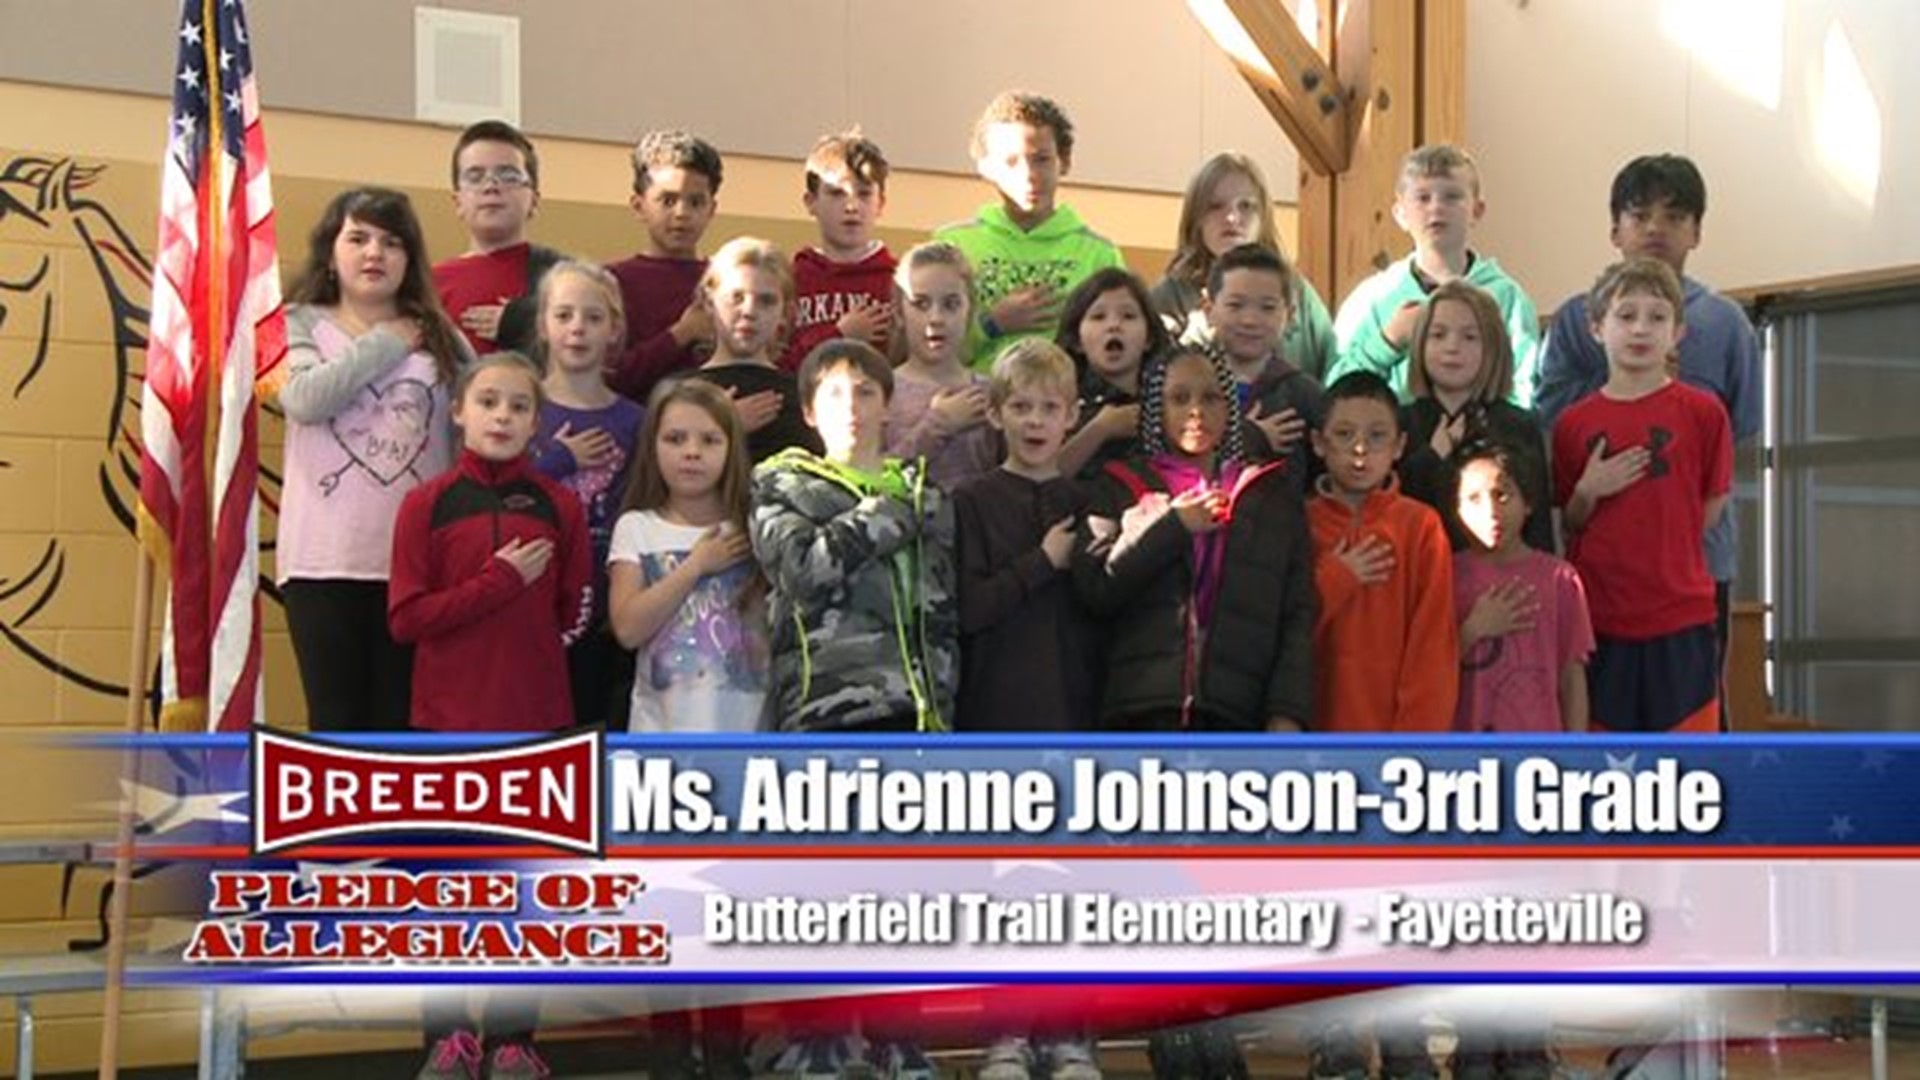 Butterfield Trail Elementary - Fayetteville, Ms. Johnson - Third Grade